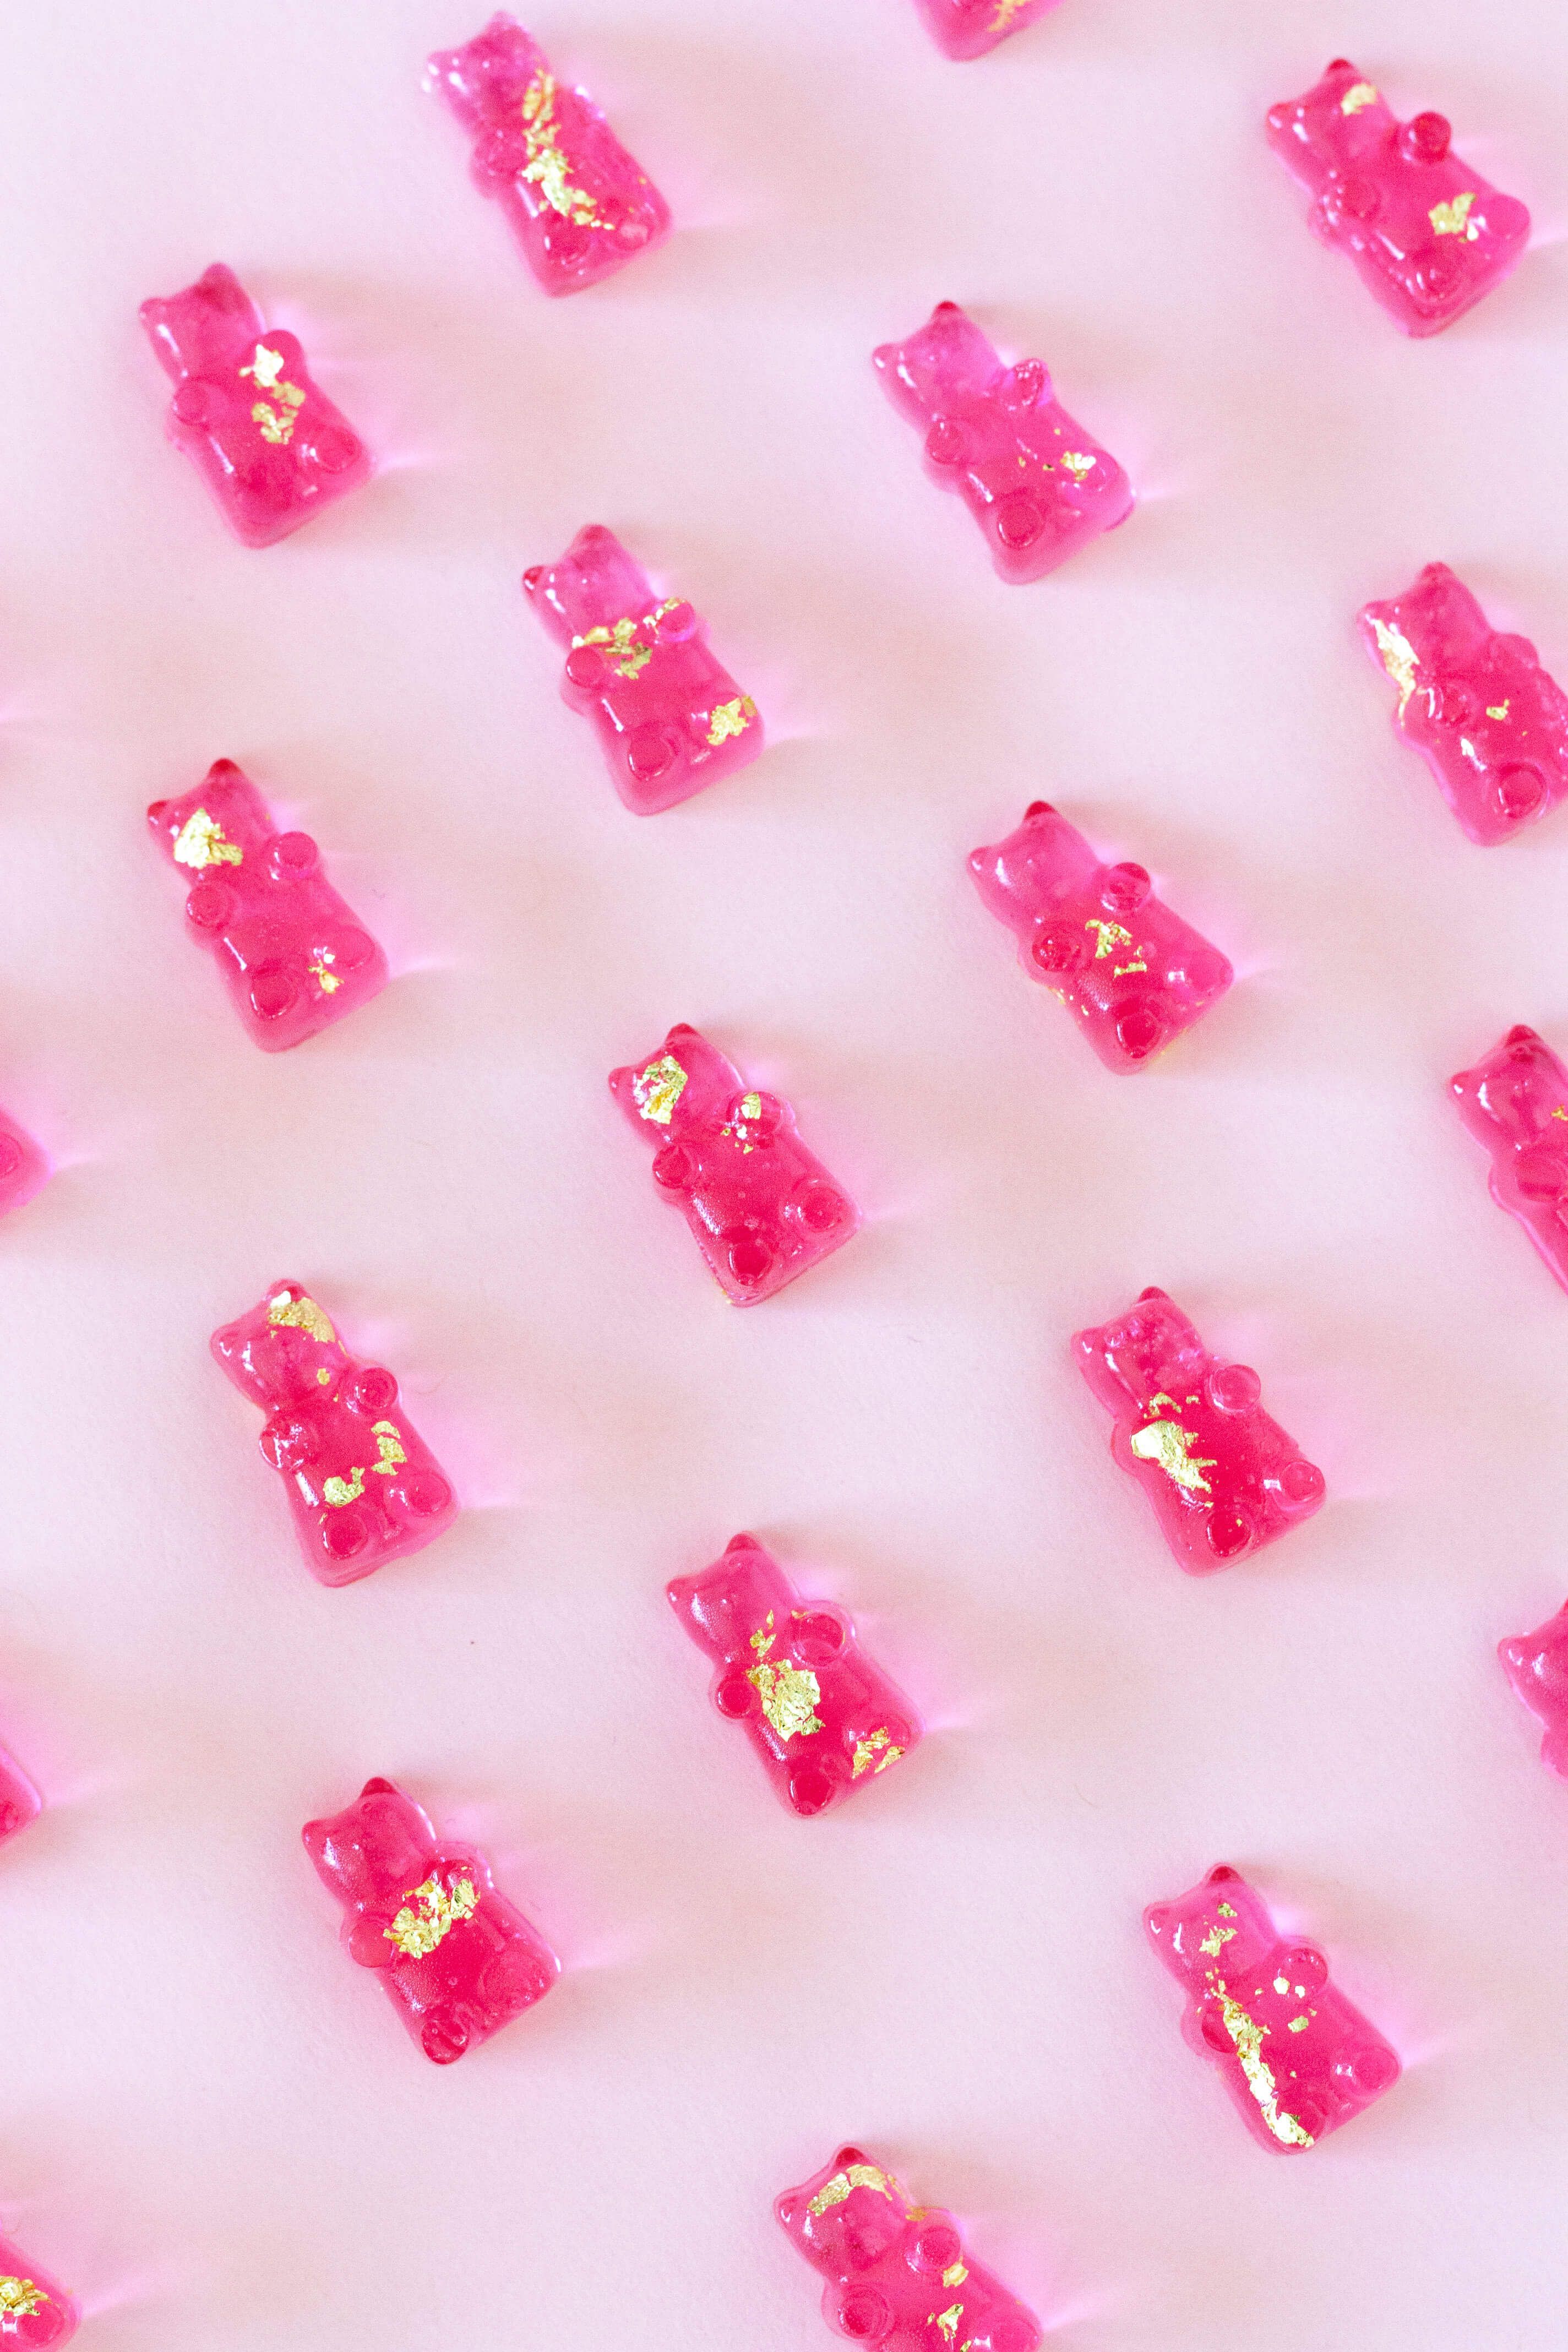 Vegan Ros Gummy Bears Emmygination Recipe Candy Photography